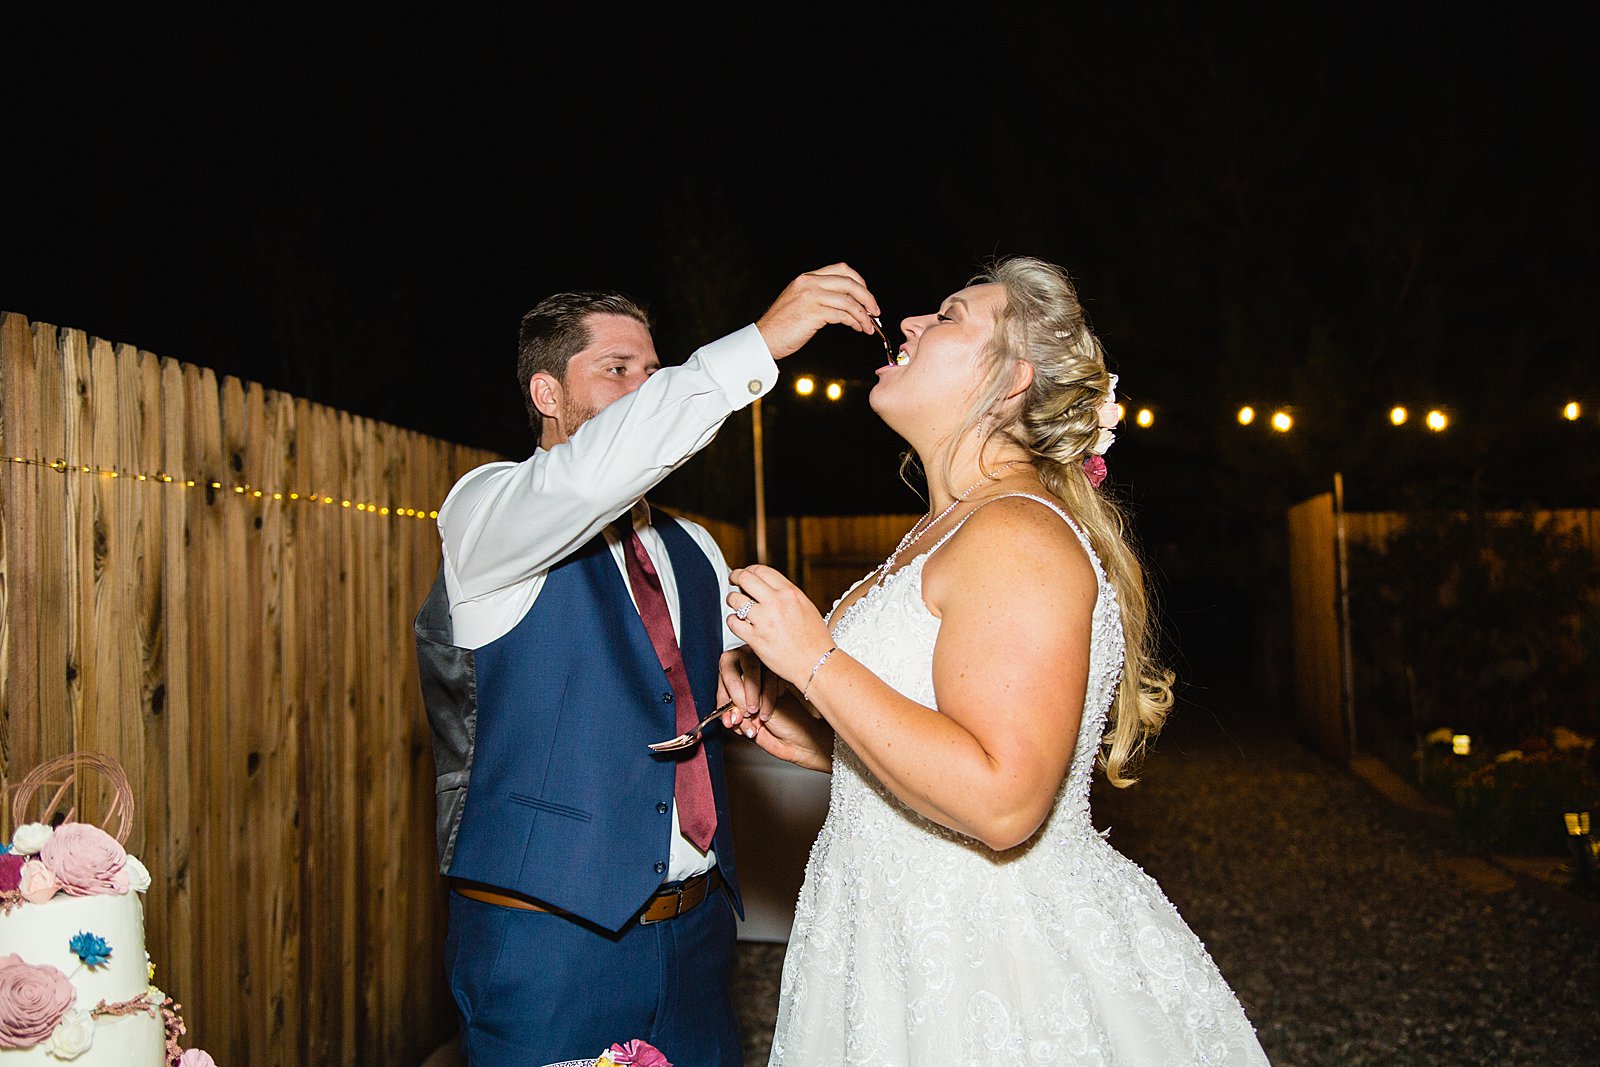 Bride and Groom cutting their wedding cake at their backyard wedding reception by Arizona wedding photographer PMA Photography.